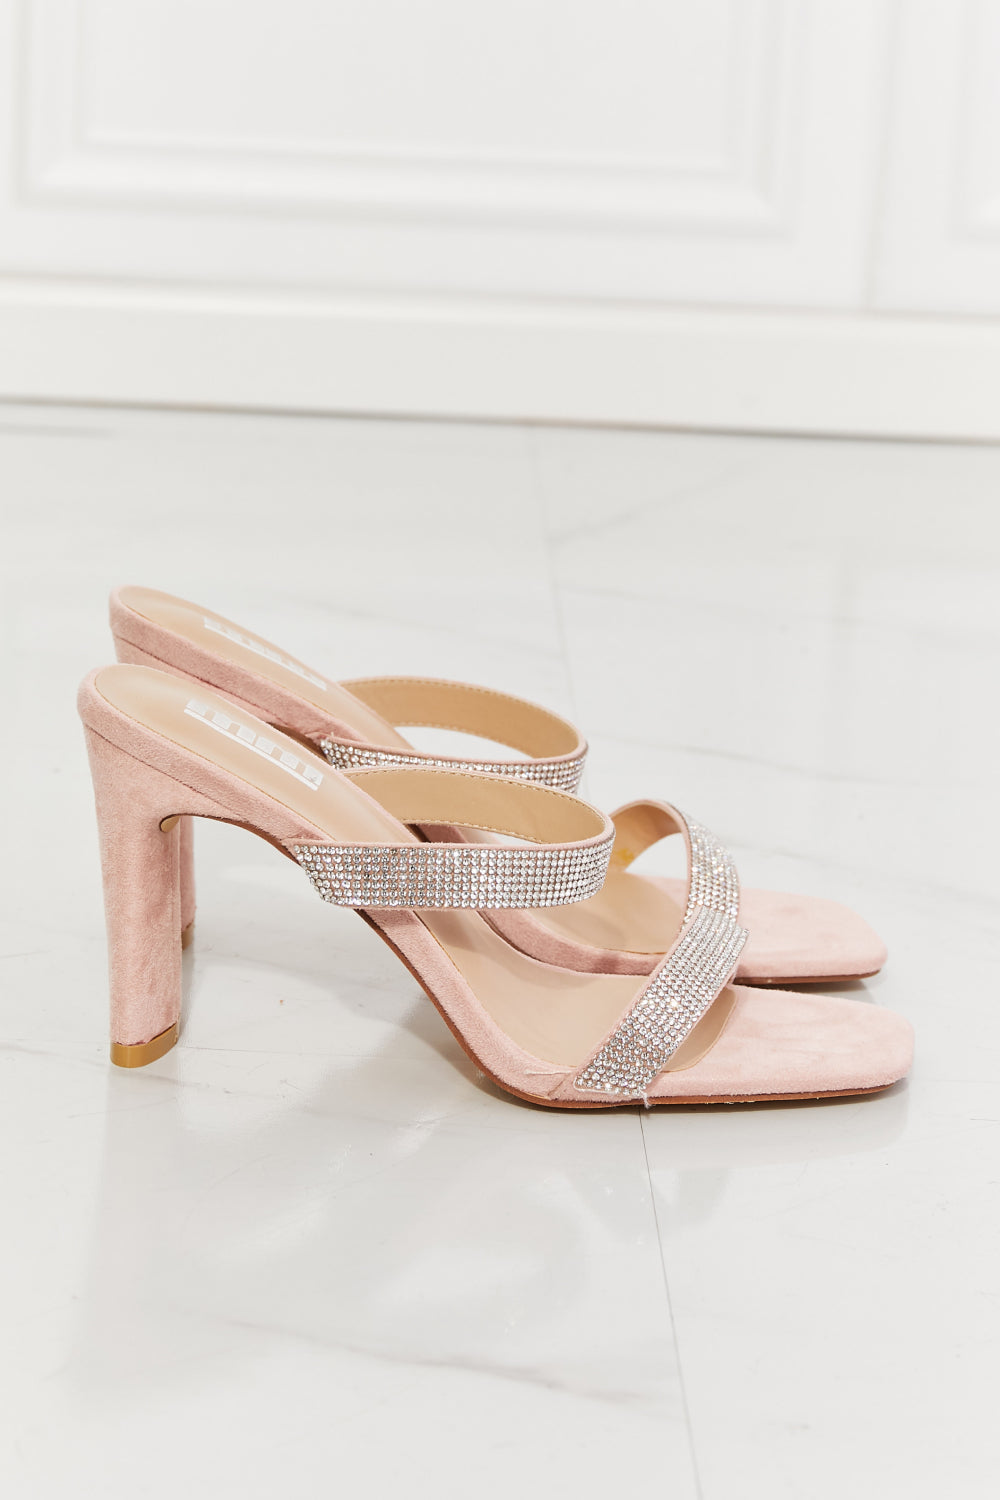 Leave a Little Sparkle Rhinestone Pink Block Heel Sandals